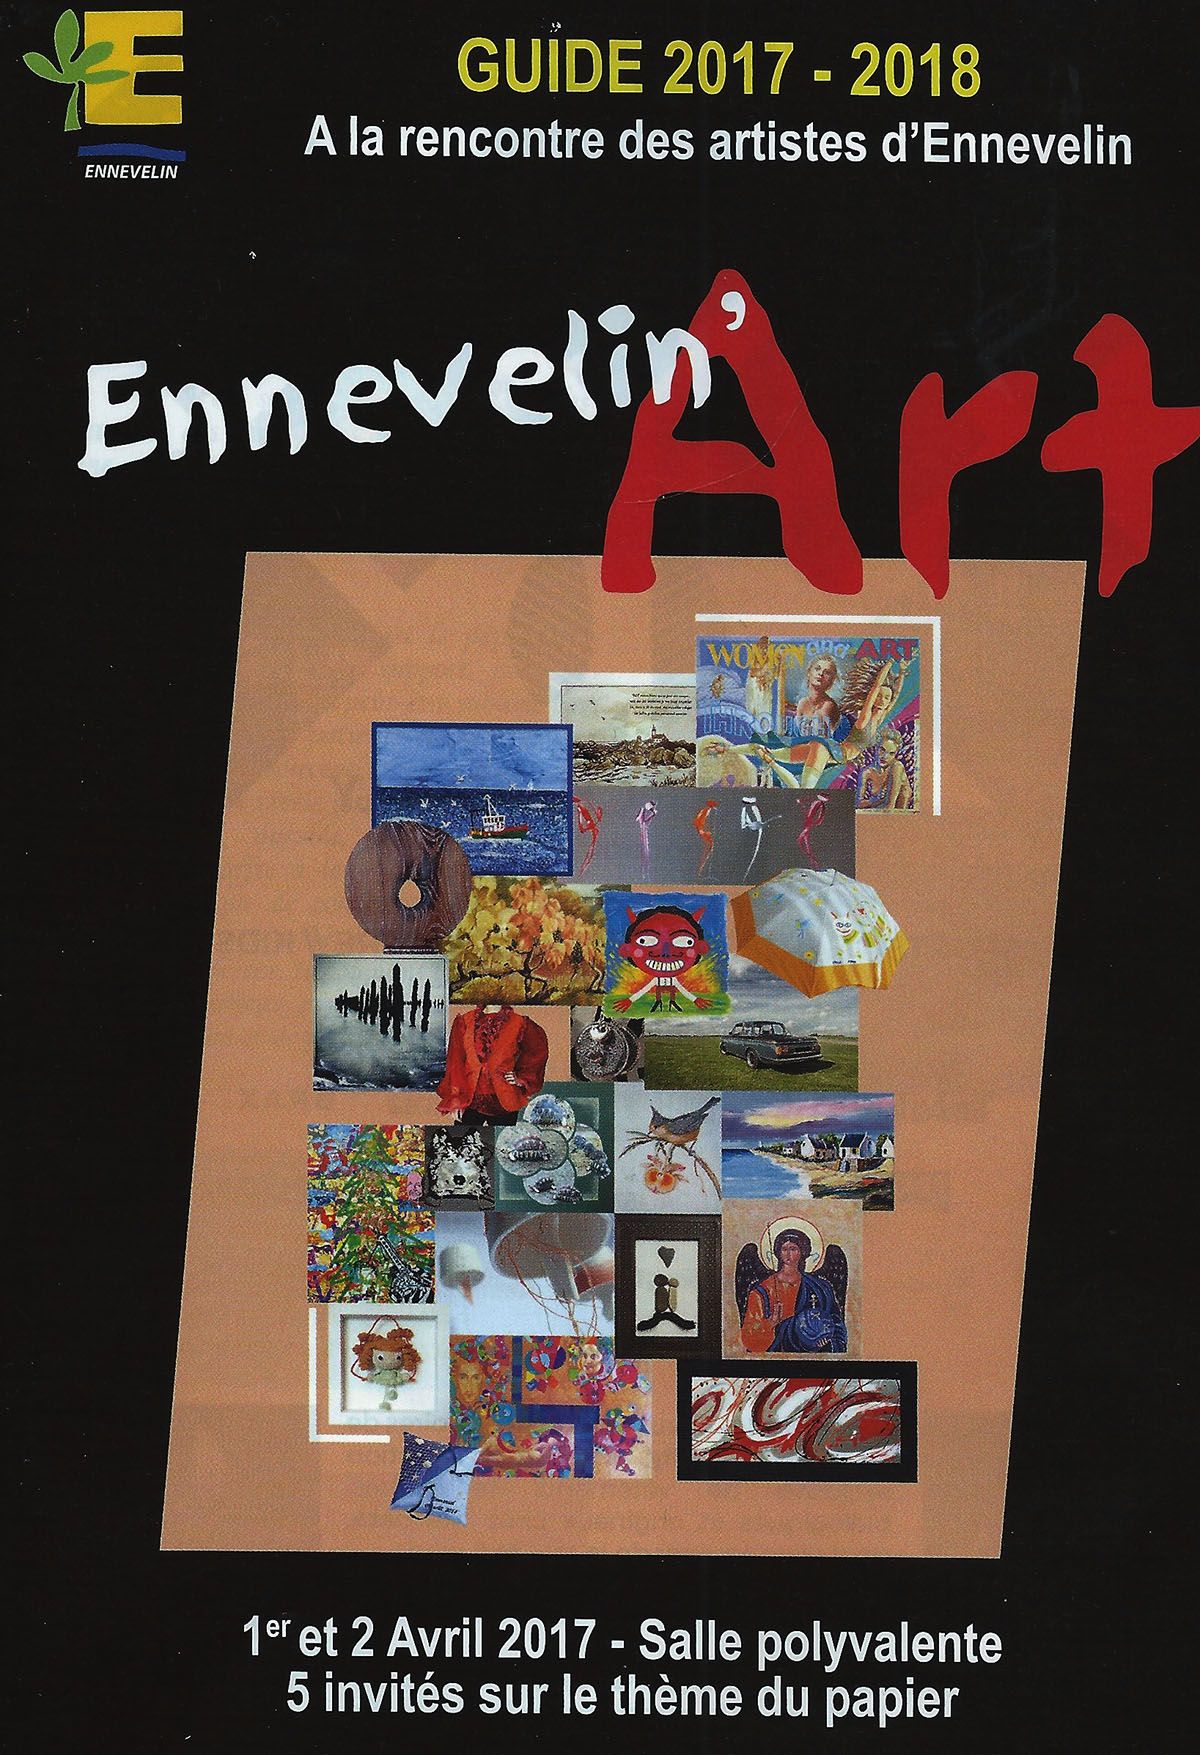 Ennevelin'Art